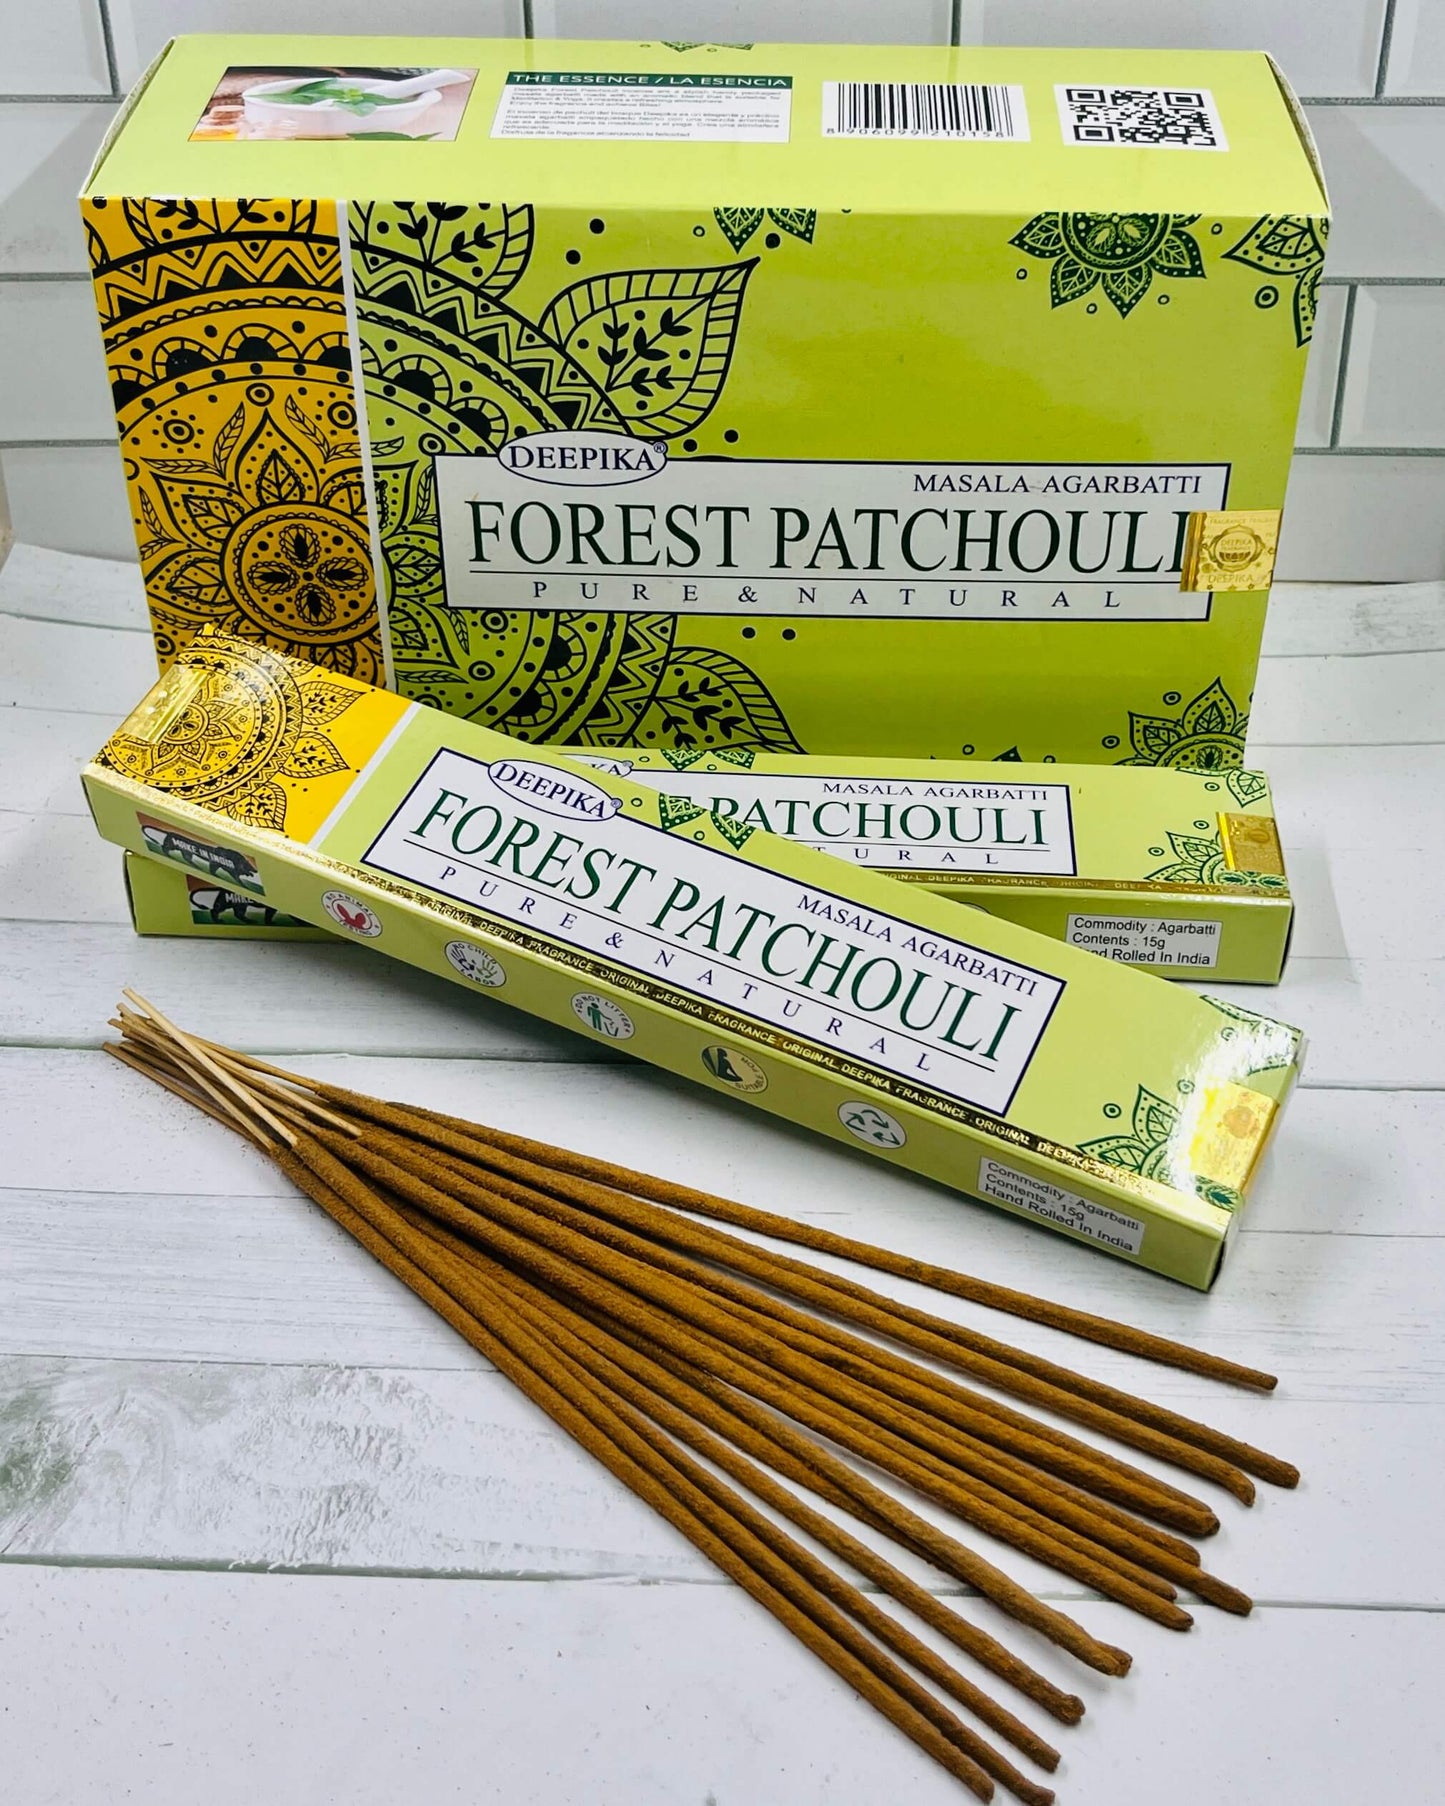 Deepika Forest Patchouli Incense